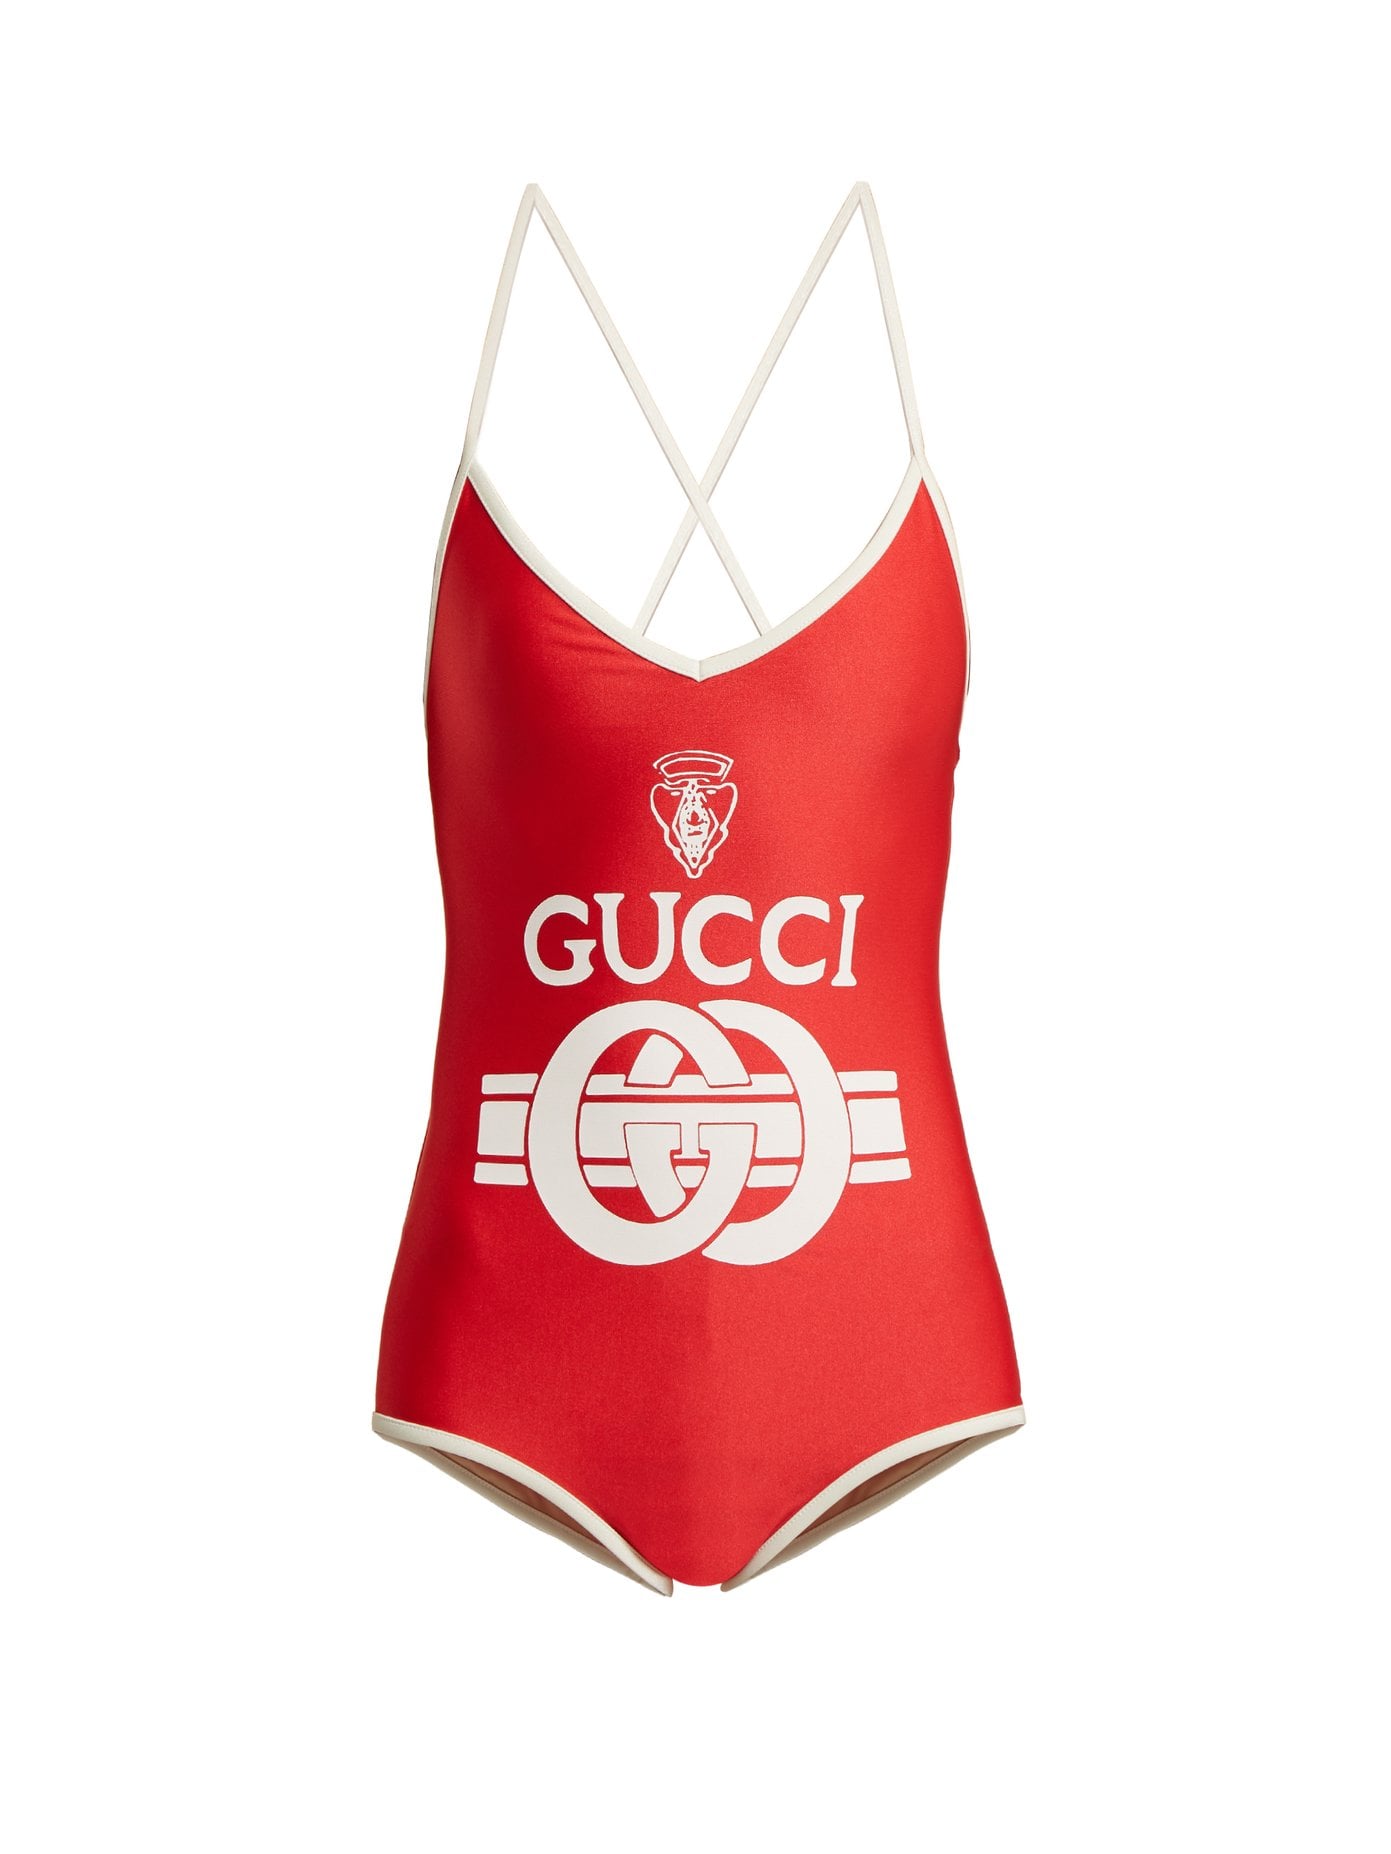 Alicia Keys's Orange Gucci Swimsuit January 2019 | POPSUGAR Fashion